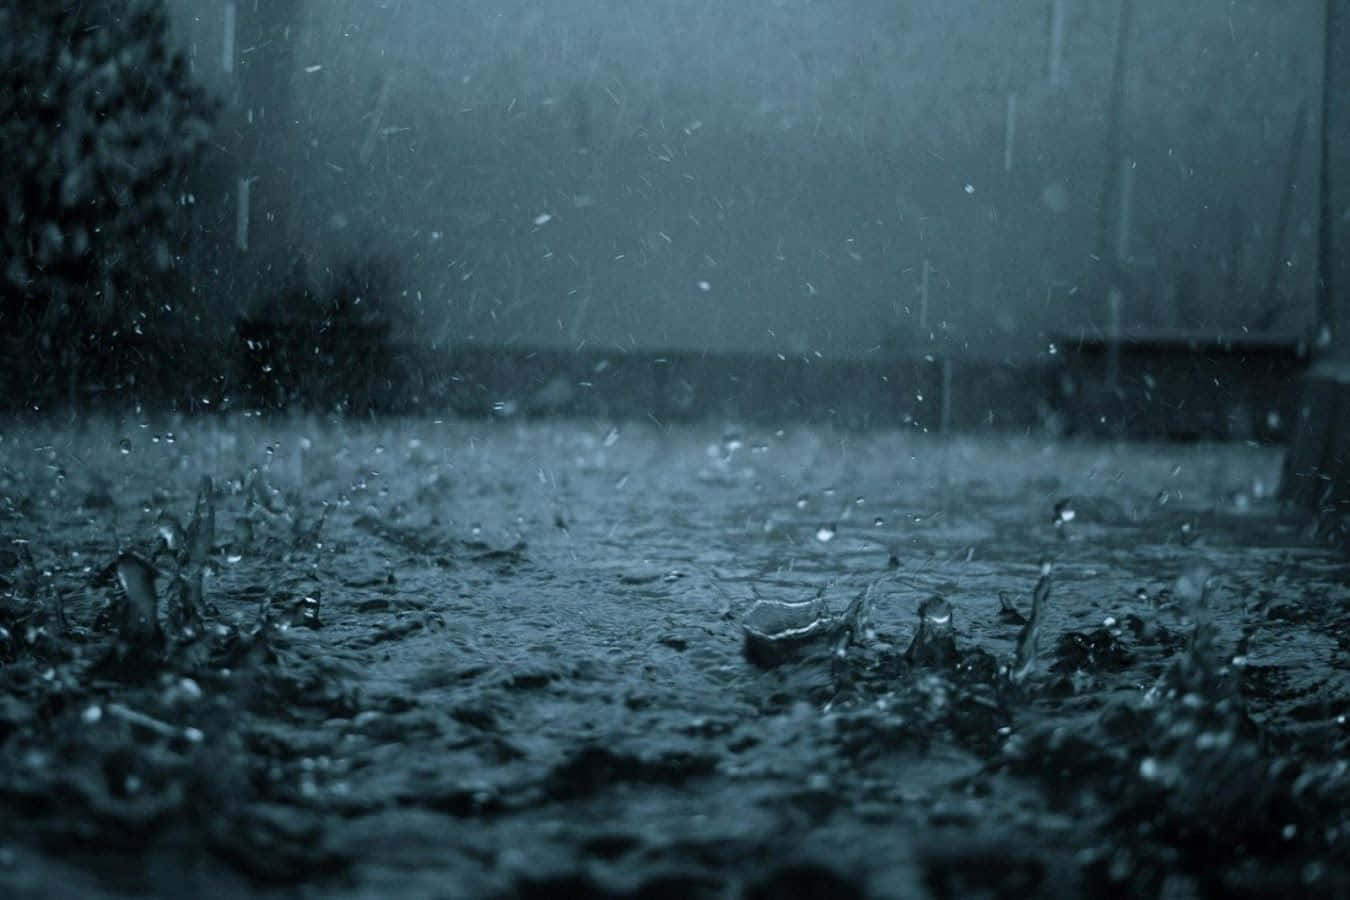 Free Images : rain, water, drop, atmosphere, sky, moisture, precipitation,  drizzle, black and white, computer wallpaper 4128x3096 - alfi59 - 1457333 -  Free stock photos - PxHere